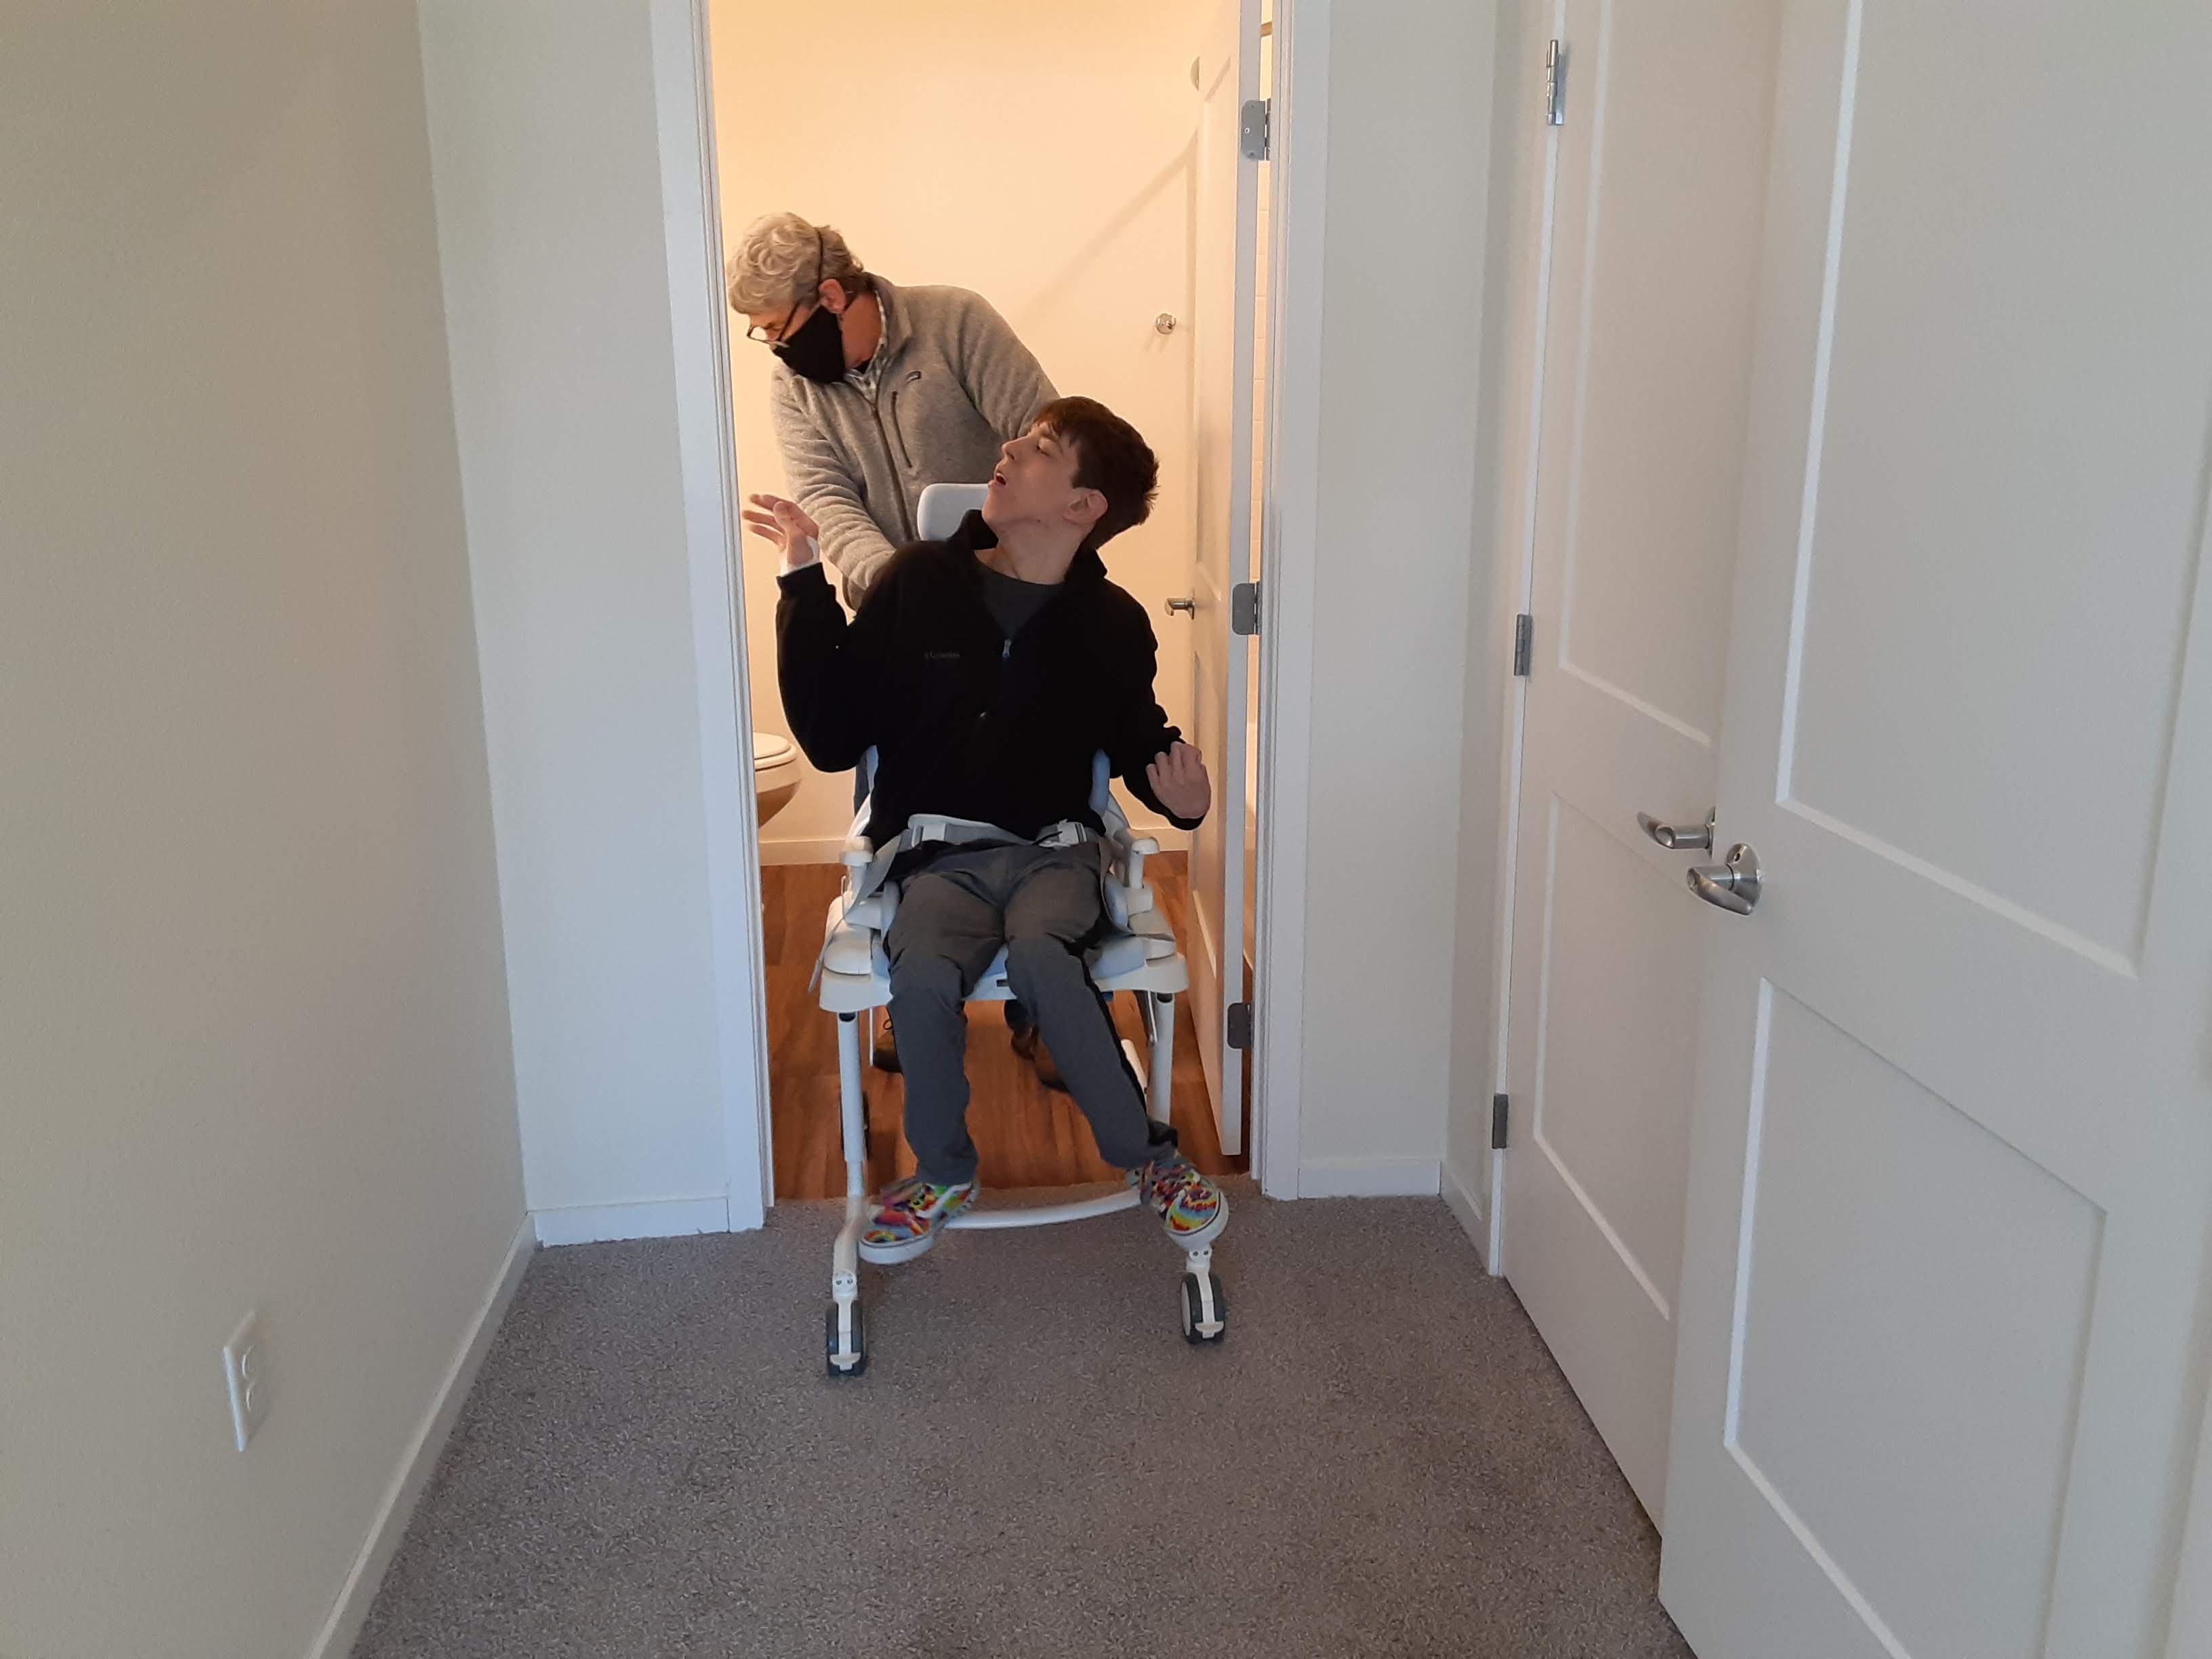 Justin in custom shower chair rolling through doorway into bathroom, dad behind him